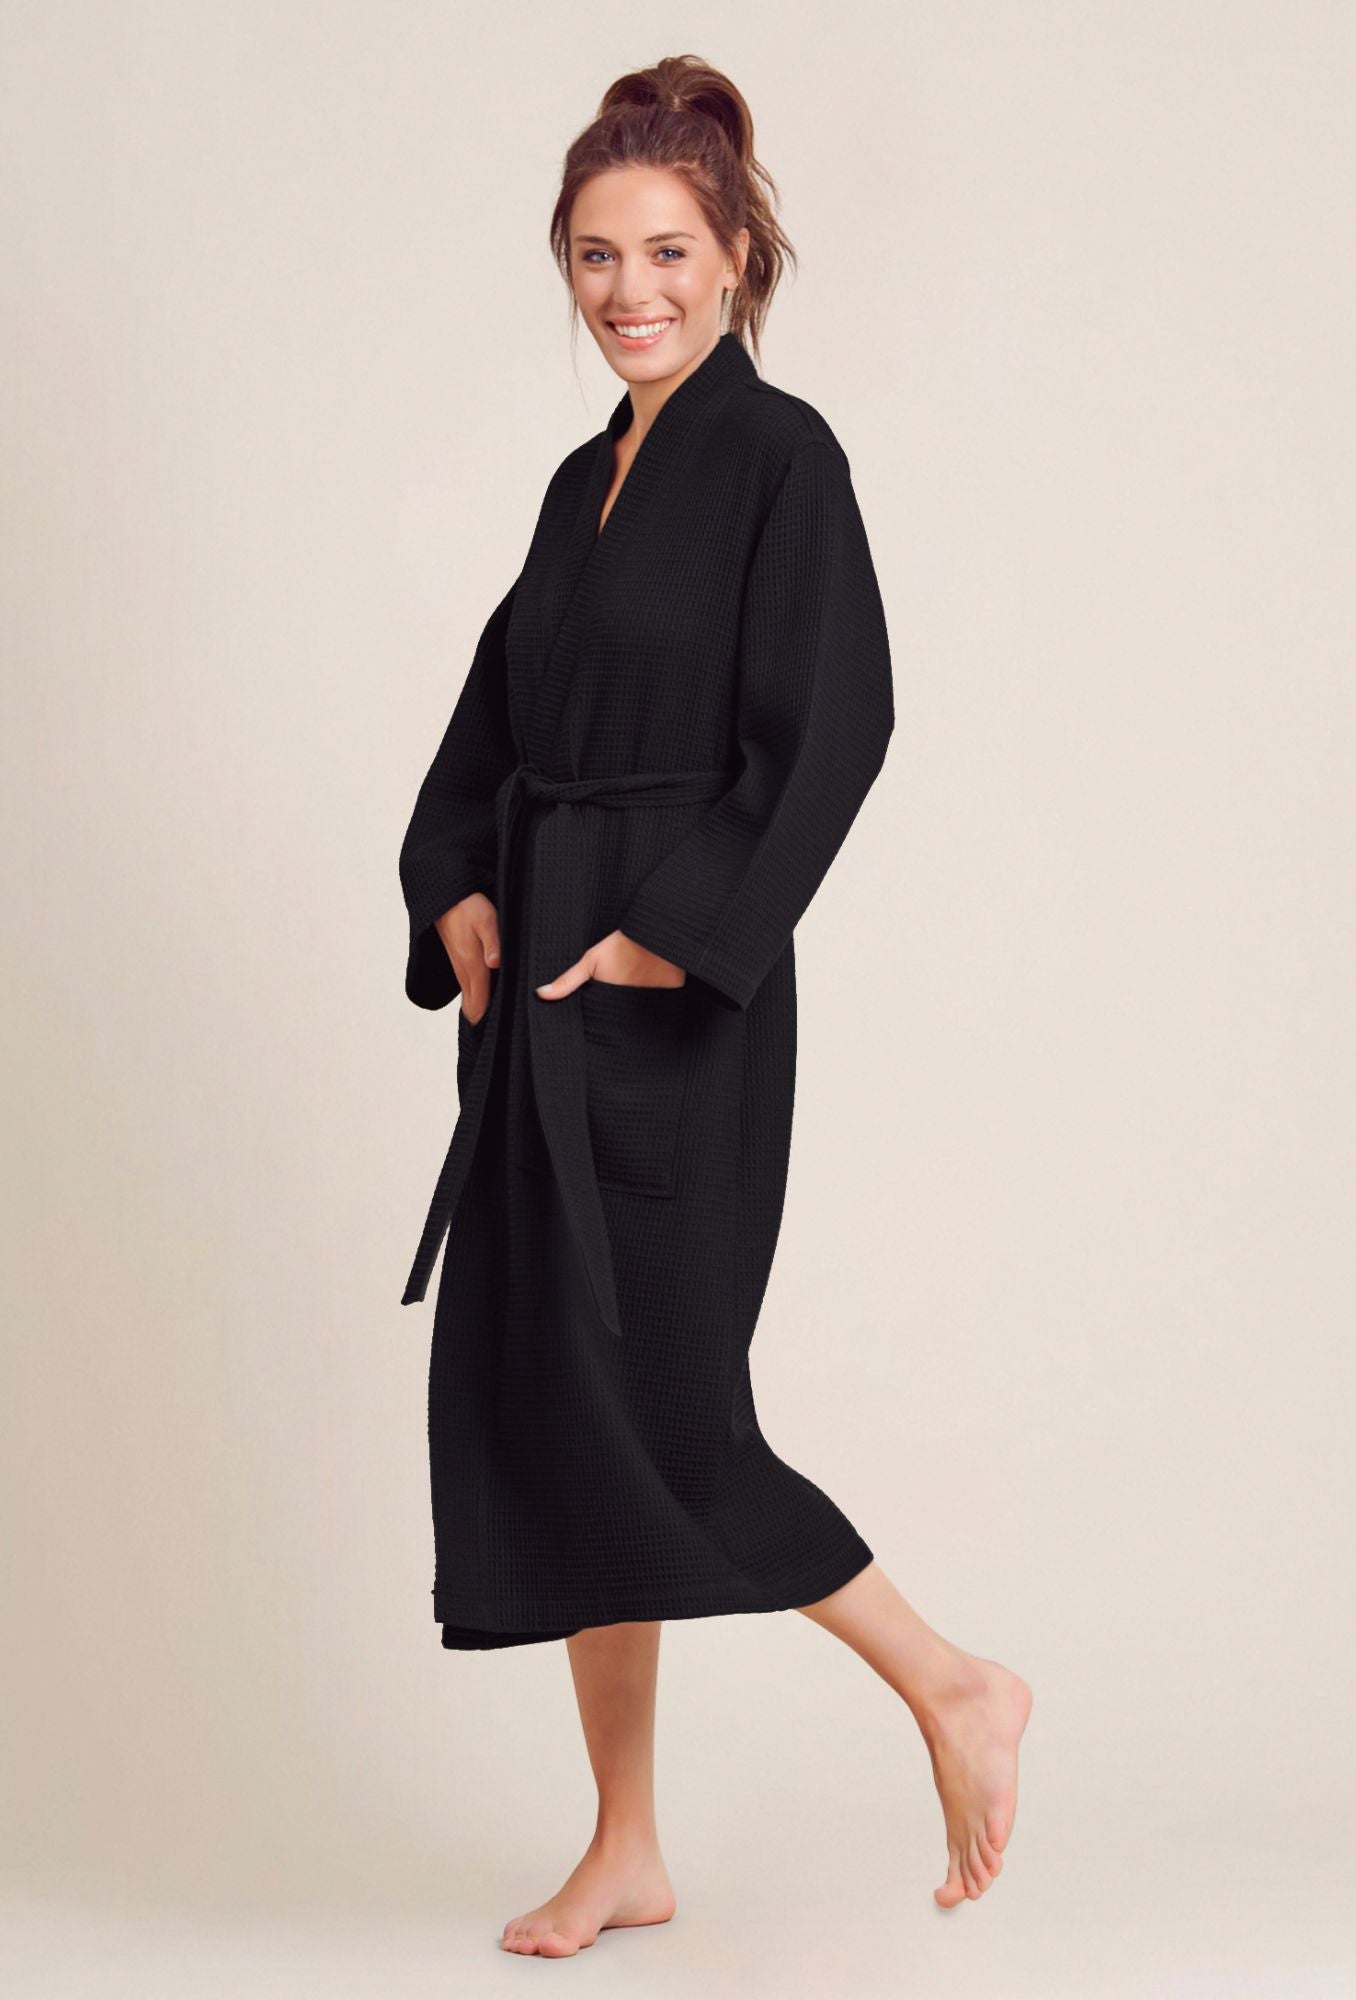 Women's Long Waffle Kimono Black Robe